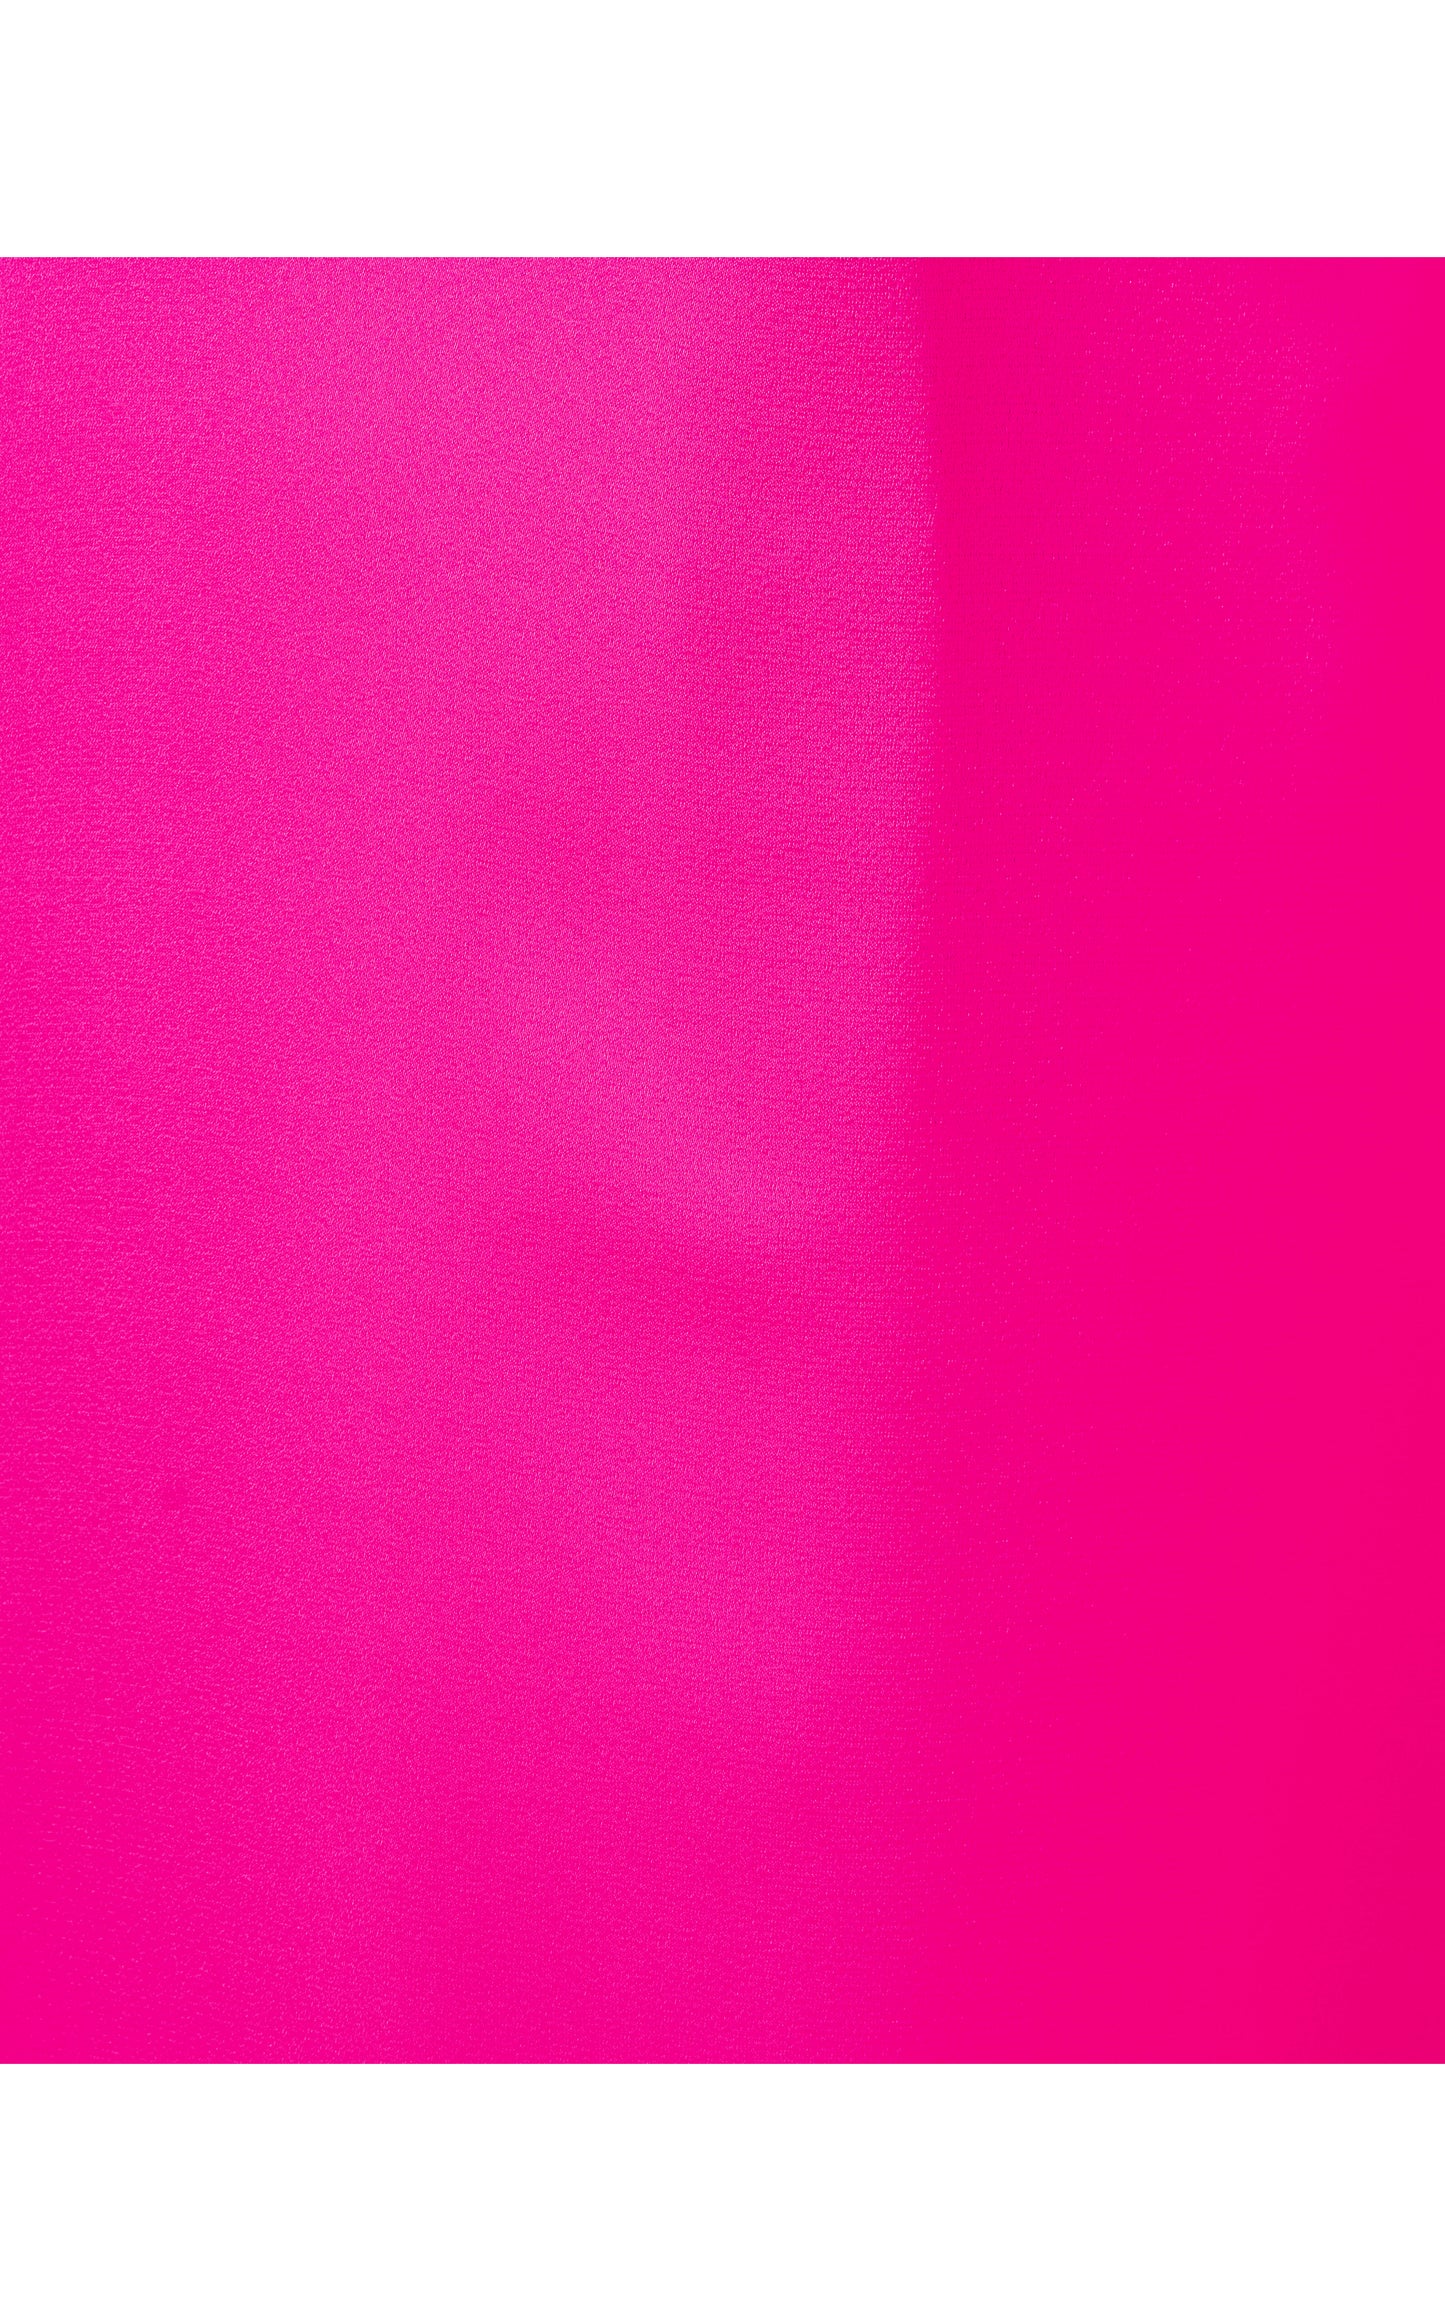 Carlynn Satin Maxi Bow Dress in Pink Palms